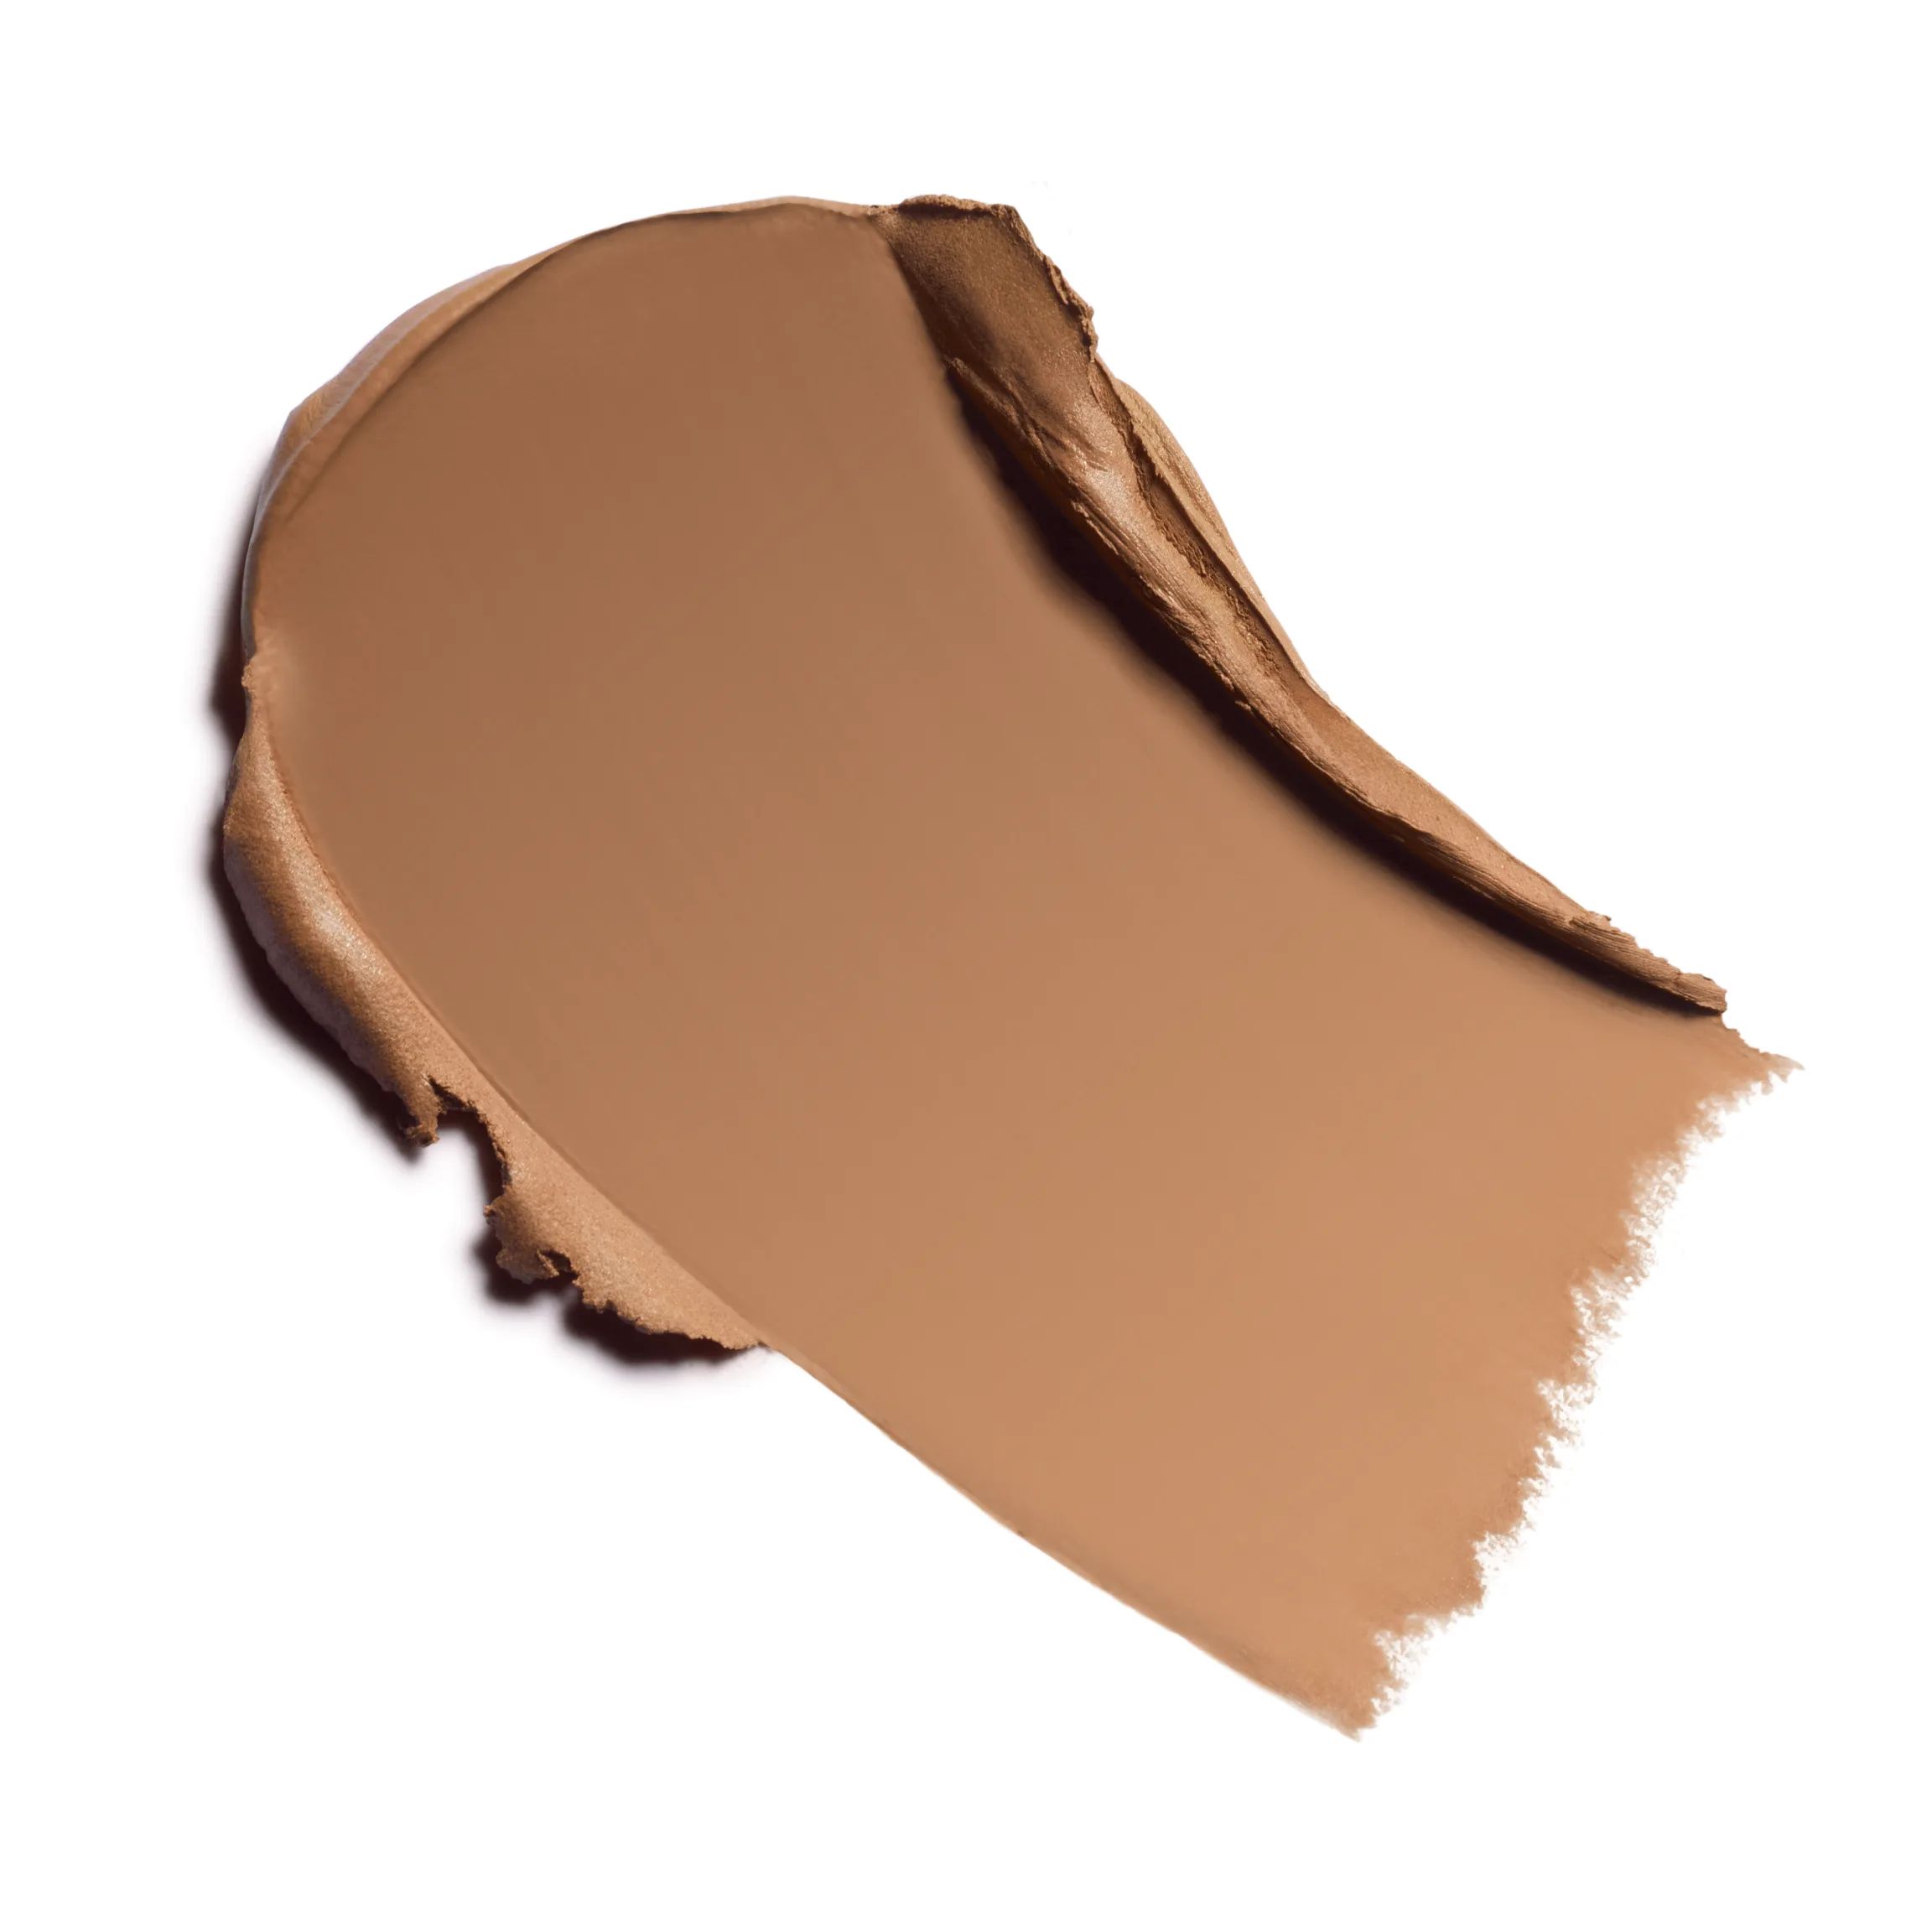 LES BEIGES Healthy glow bronzing cream 392 - Soleil tan medium bronze | CHANEL | Chanel, Inc. (US)